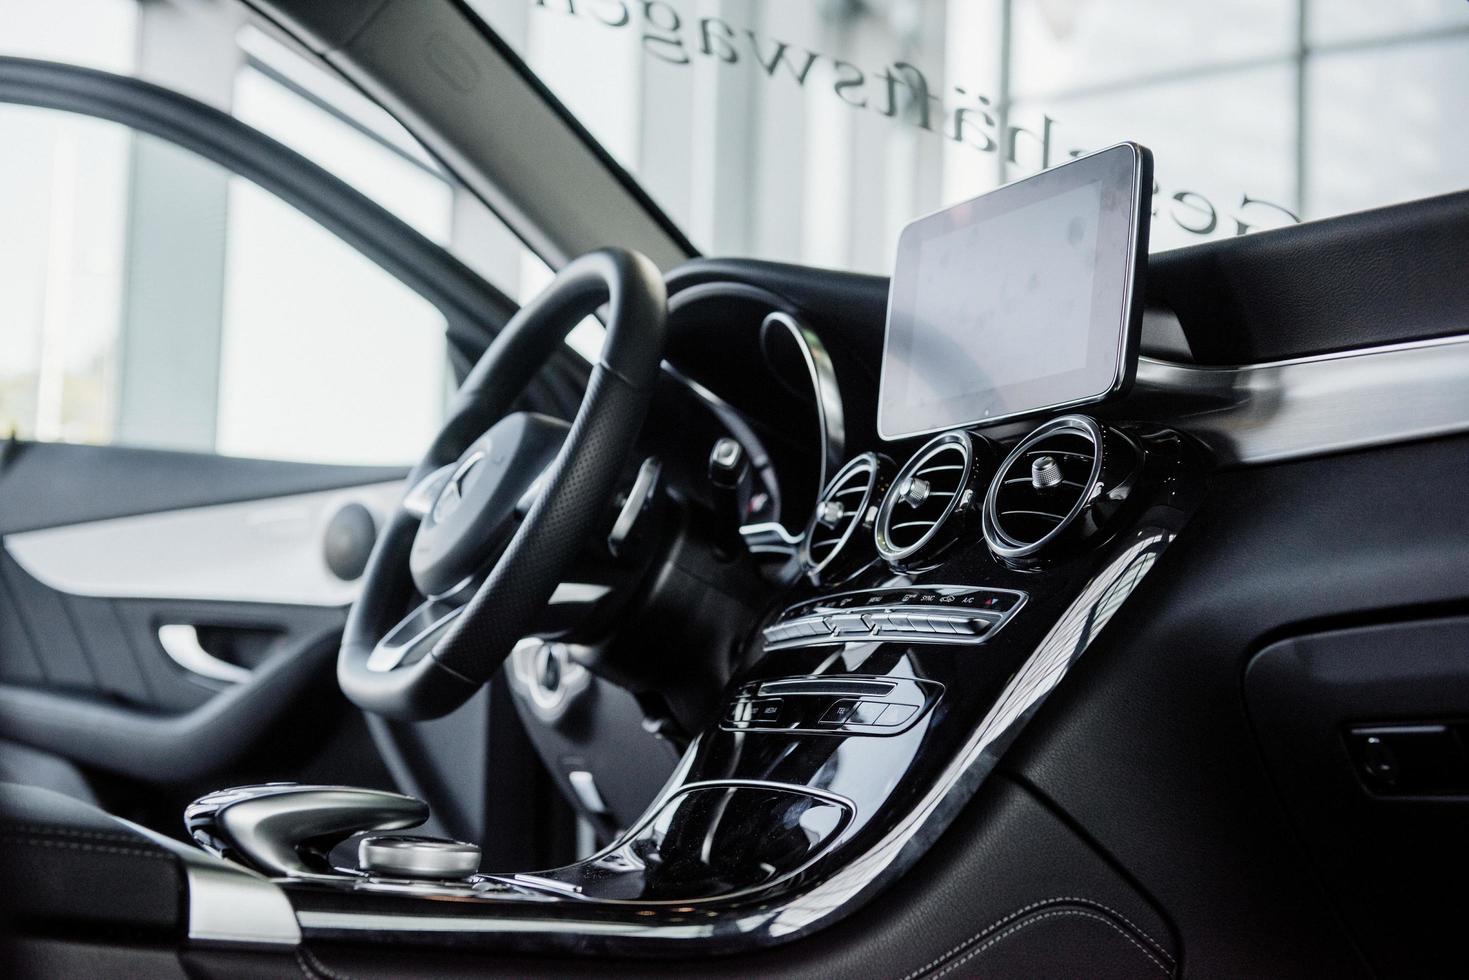 stuttgart, alemania - 16 de octubre de 2018 museo mercedes. la tableta cerca del volante. Interior del coche nuevo con interior negro. foto